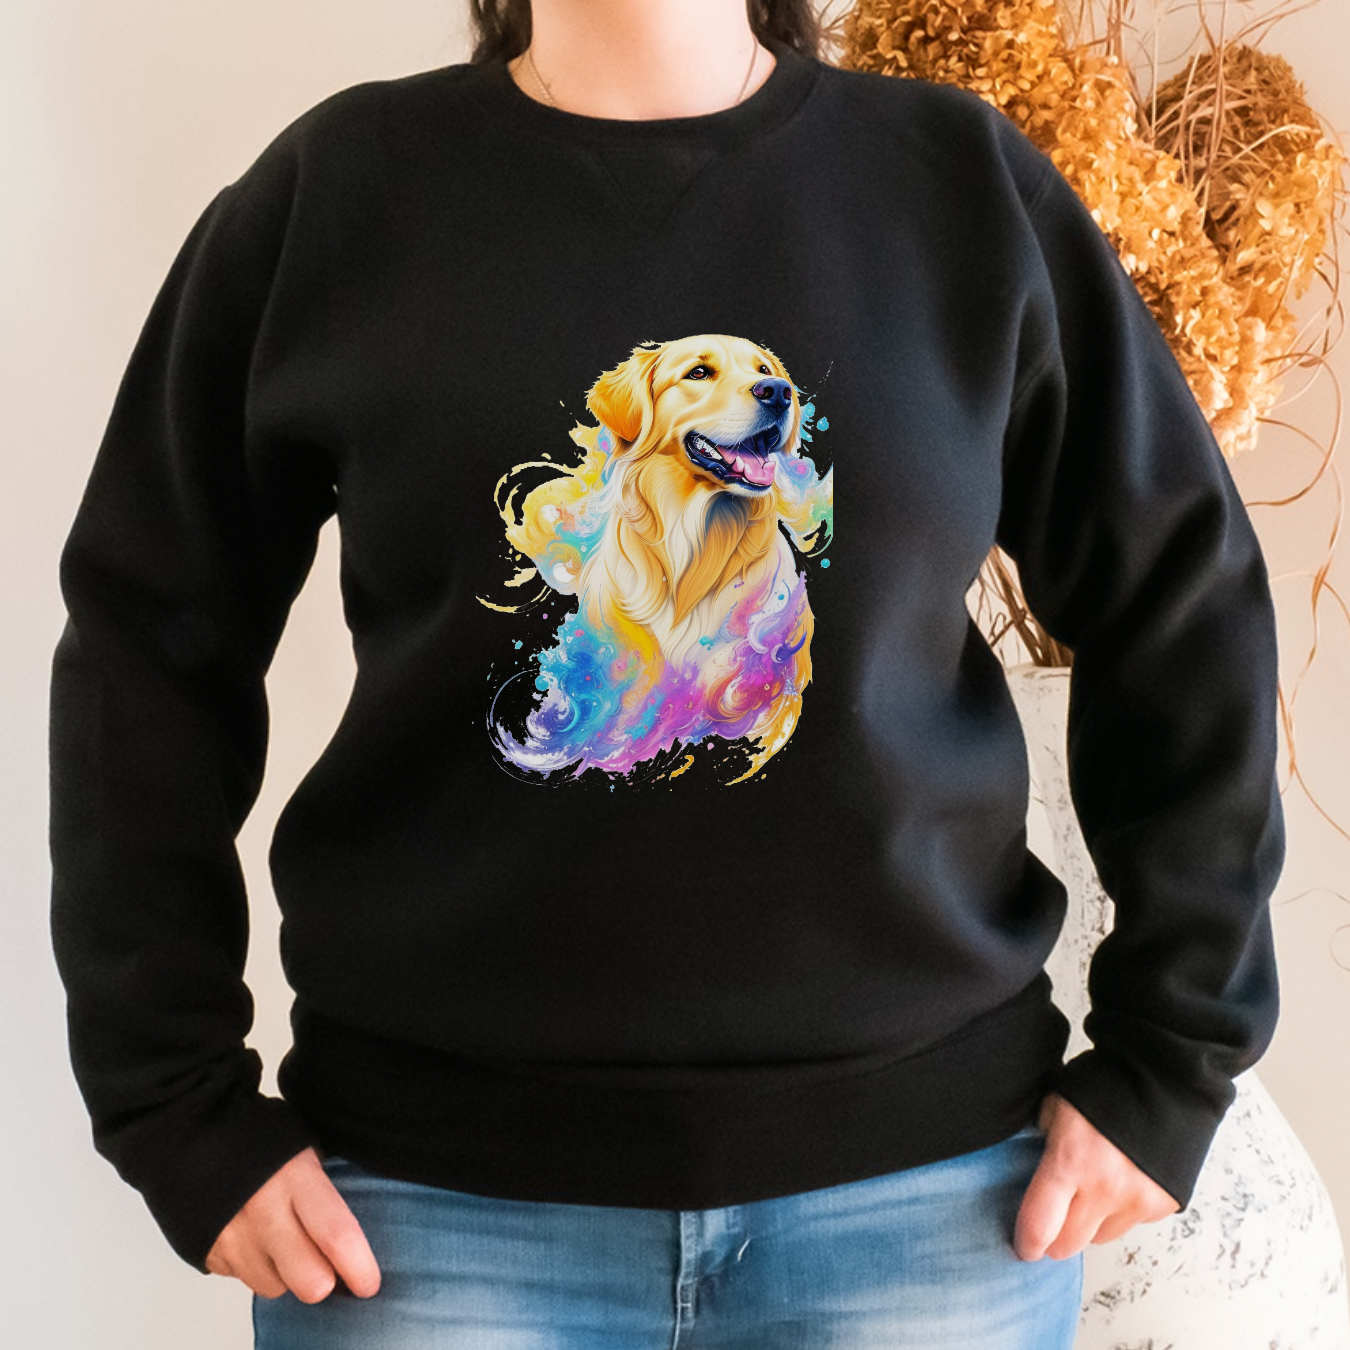 "Golden lab graphic design centered on black sweater."